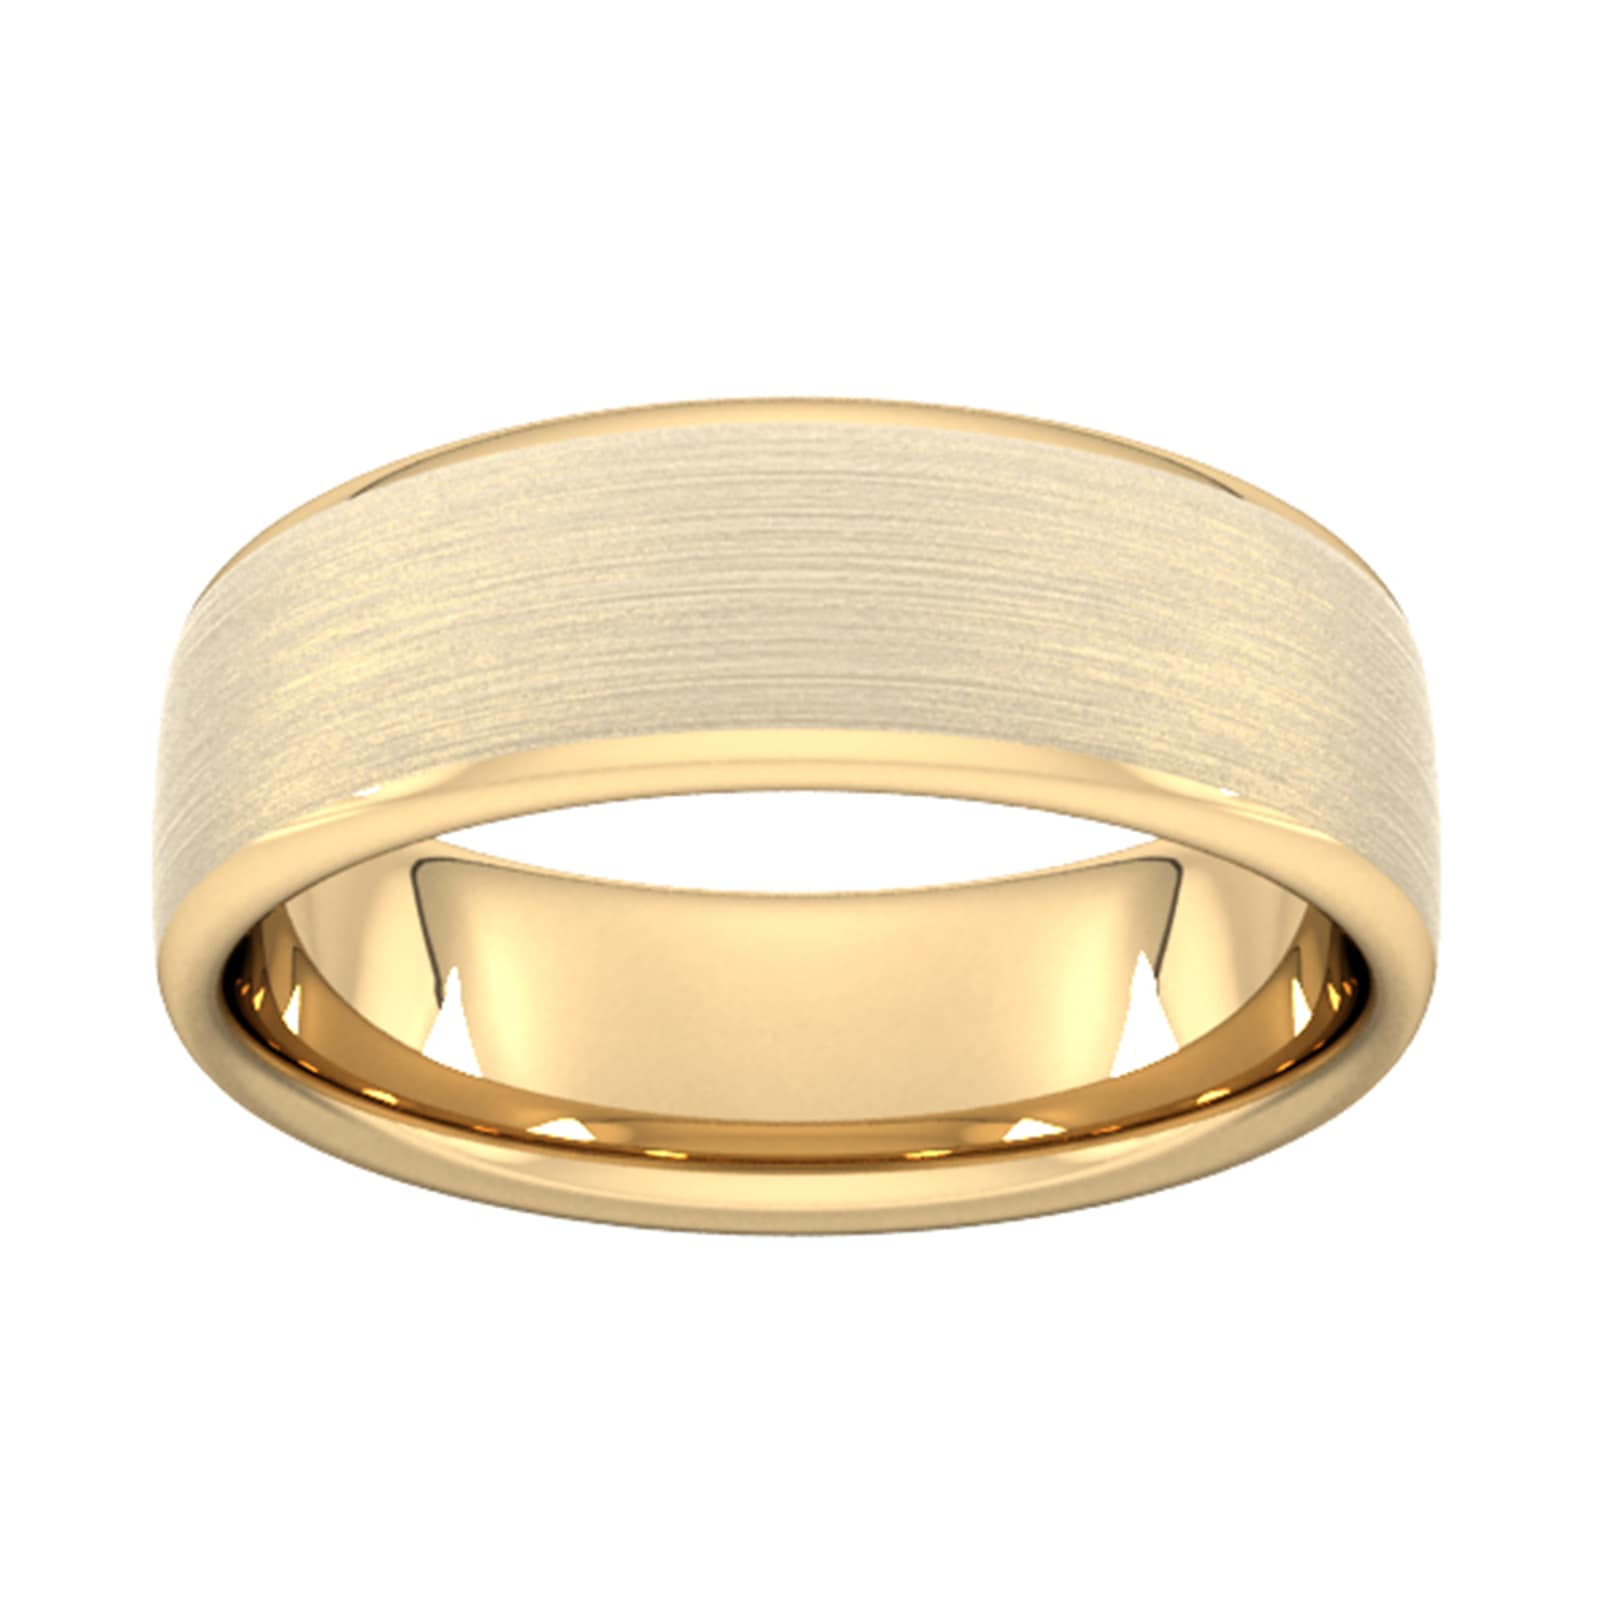 7mm Slight Court Heavy Matt Finished Wedding Ring In 9 Carat Yellow Gold - Ring Size W